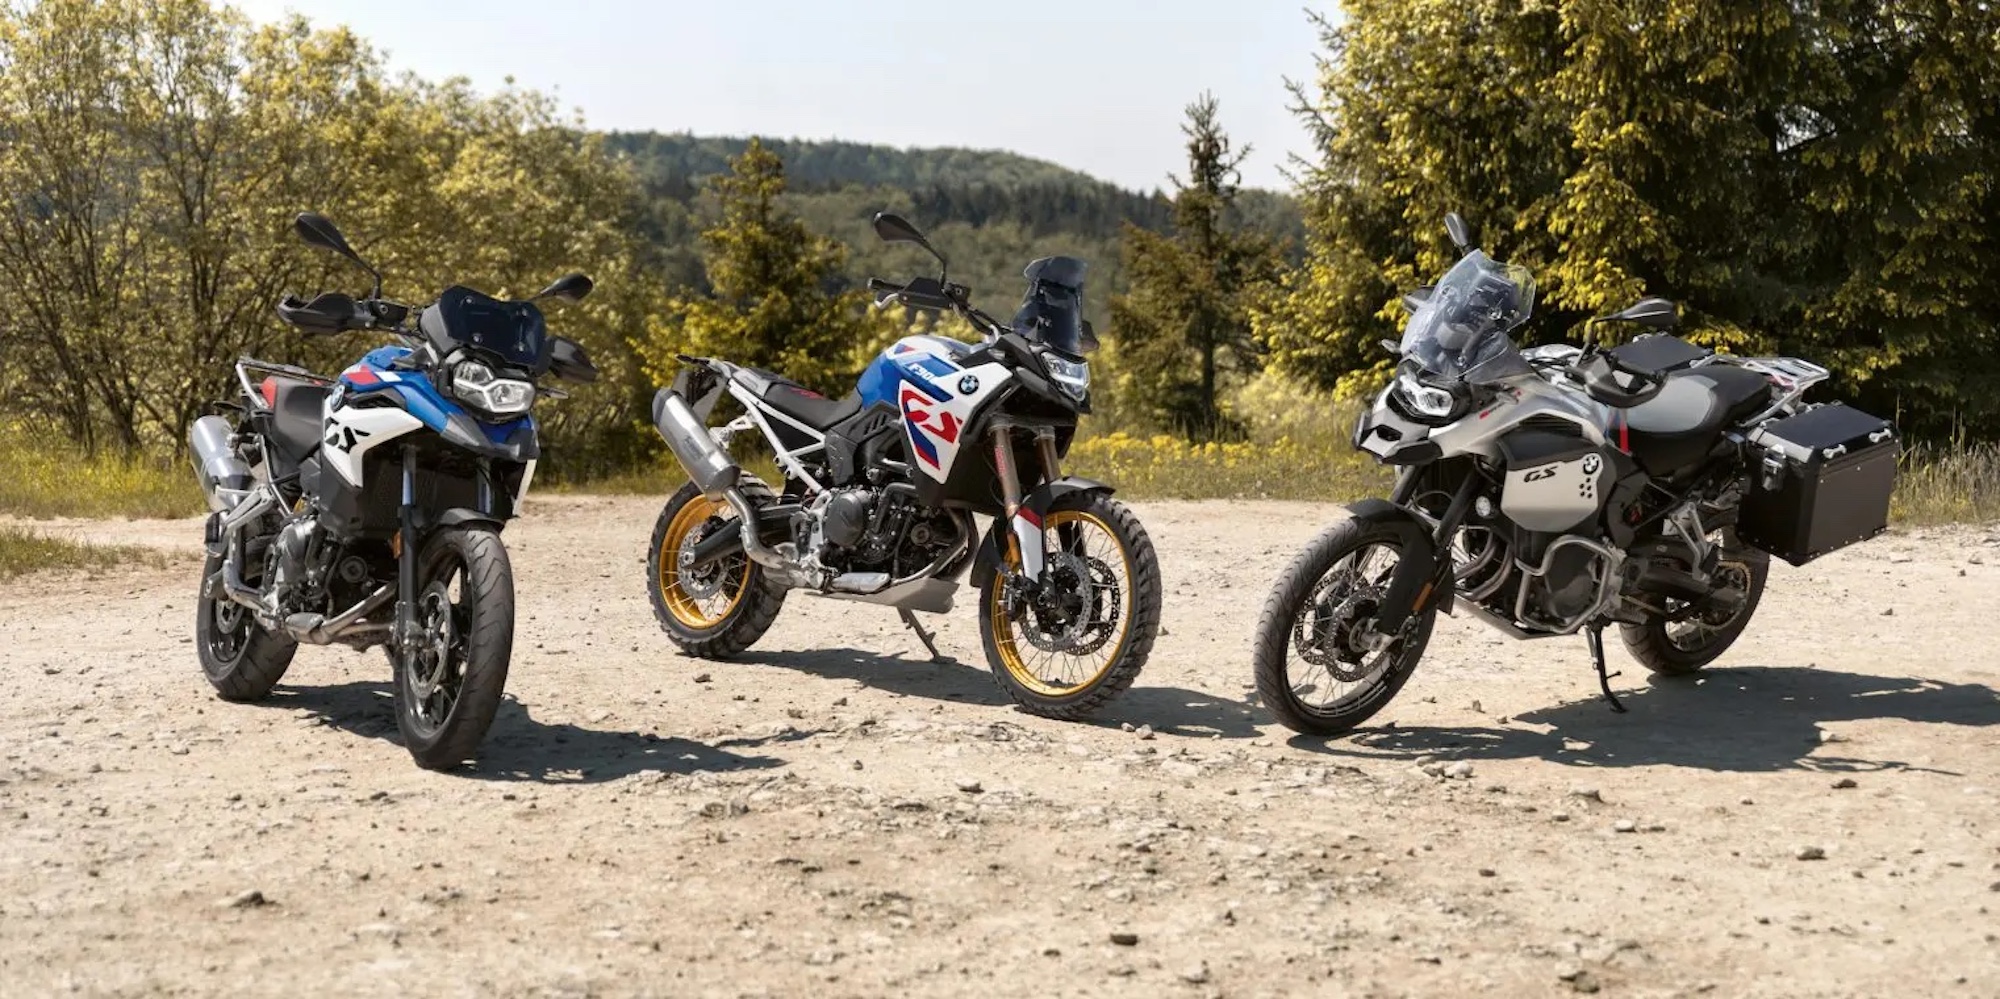 Three motorcycles on dirt. 